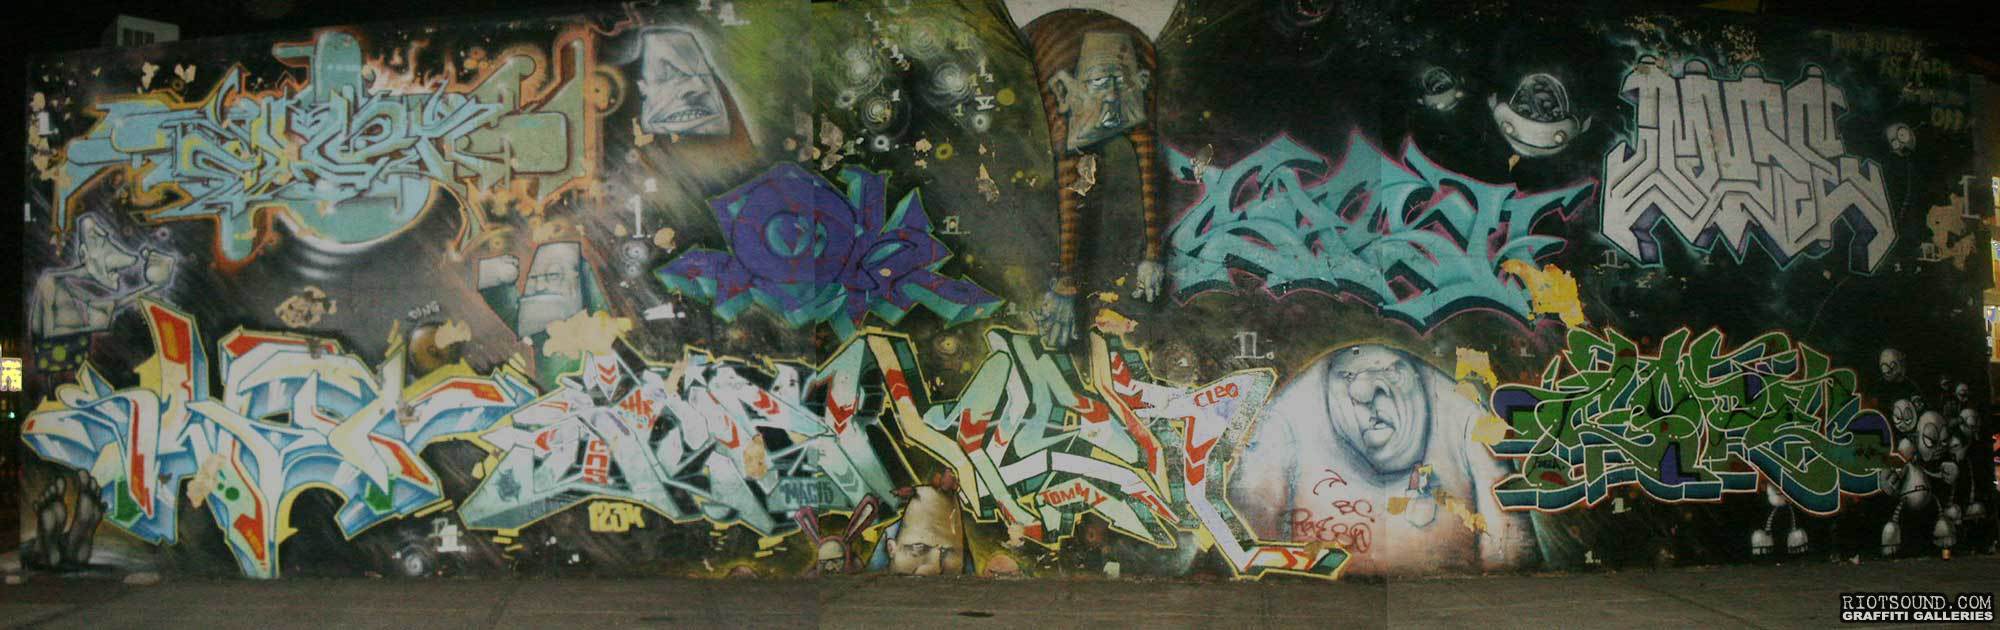 Queens Graffiti 15